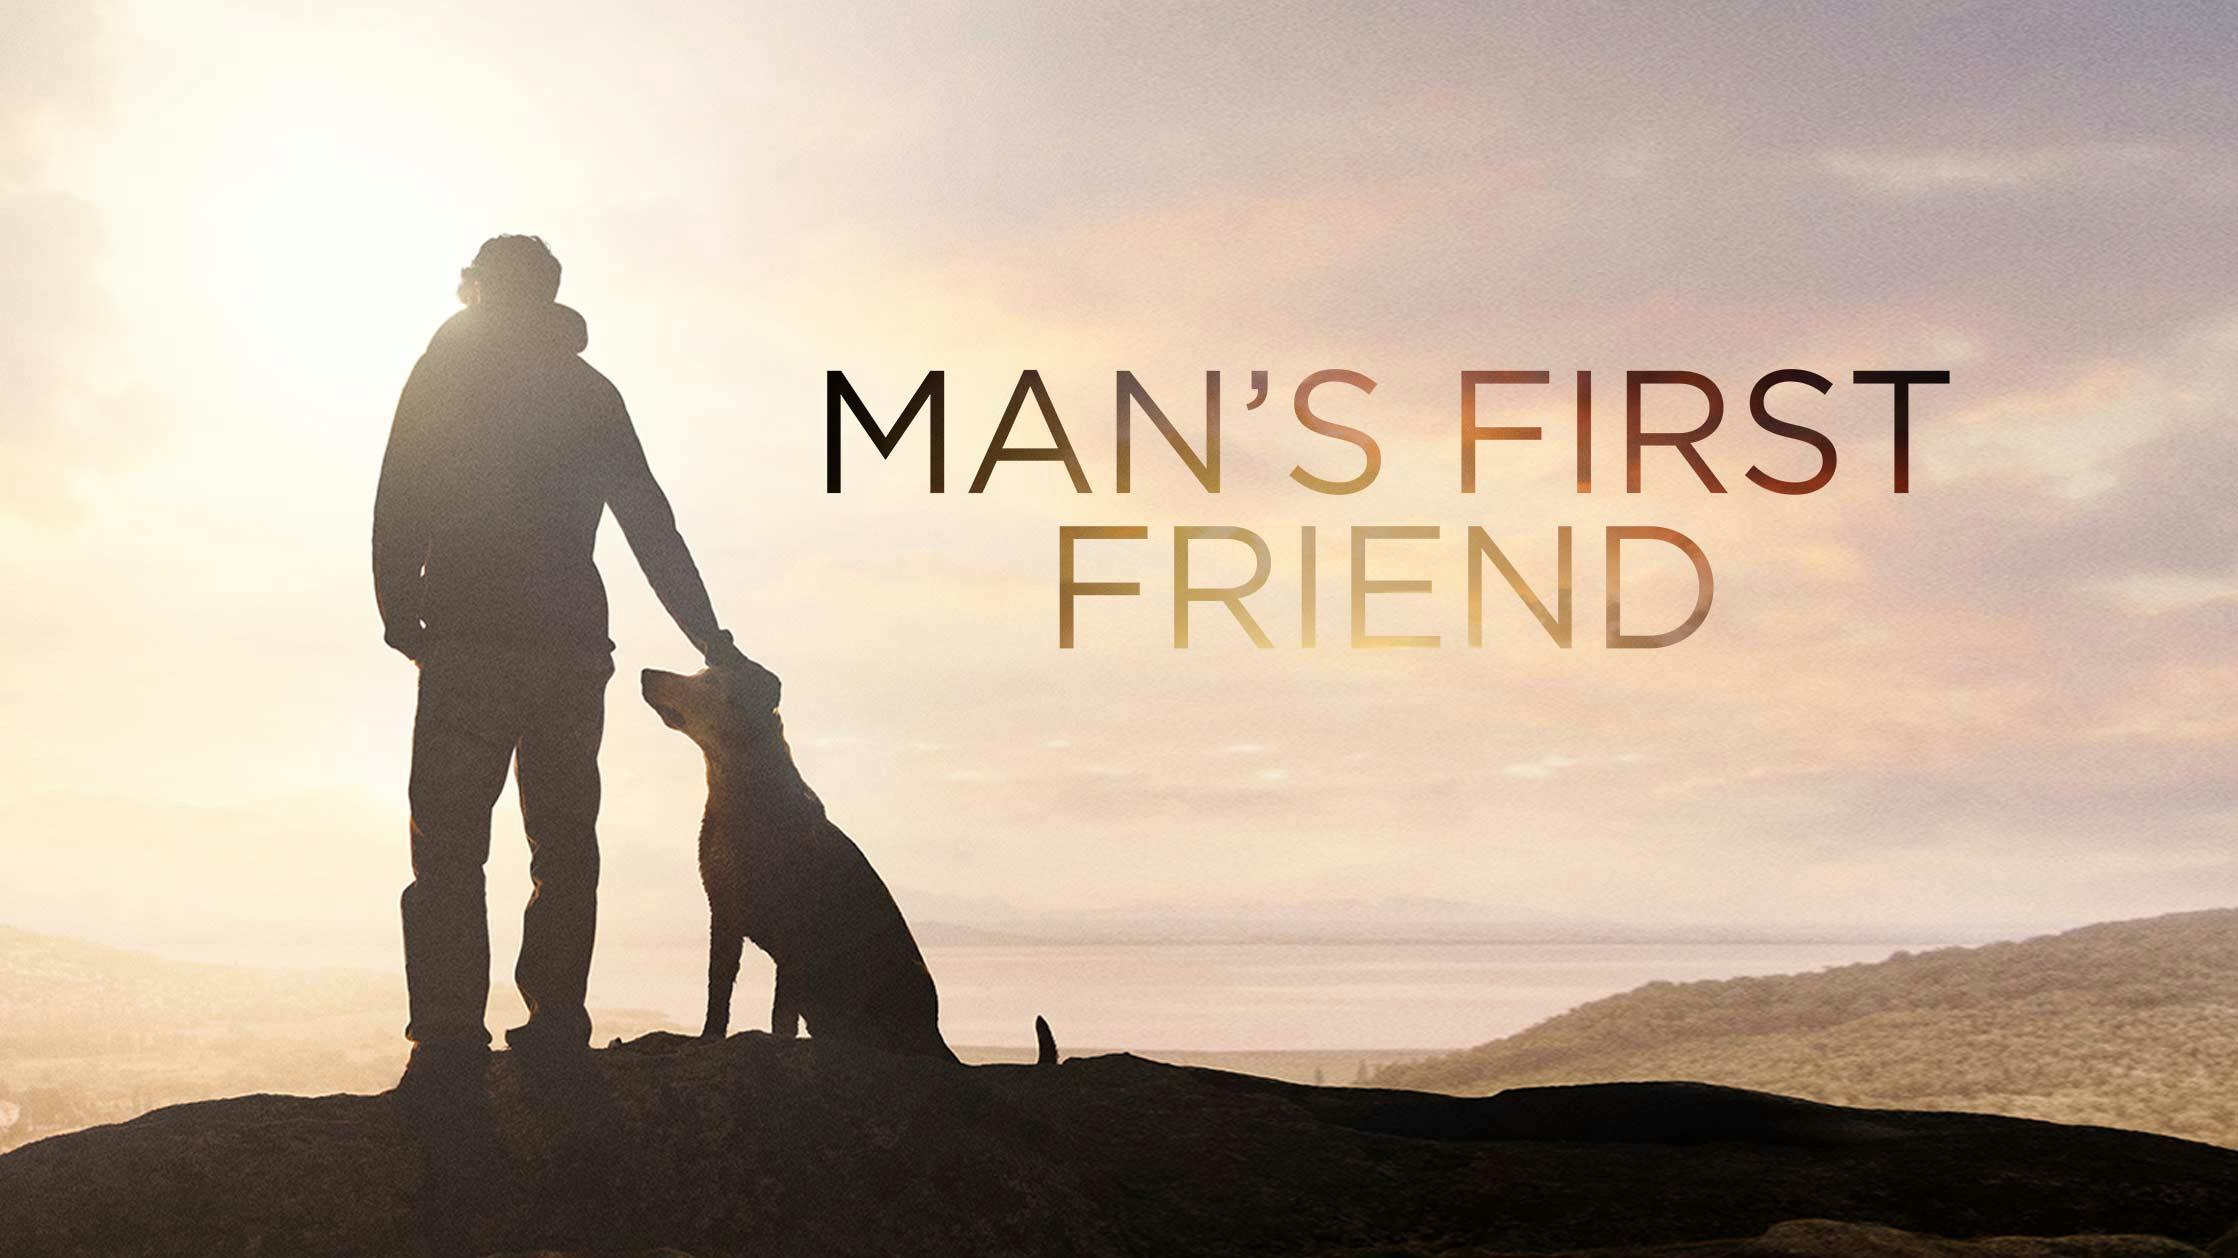 Man's First Friend